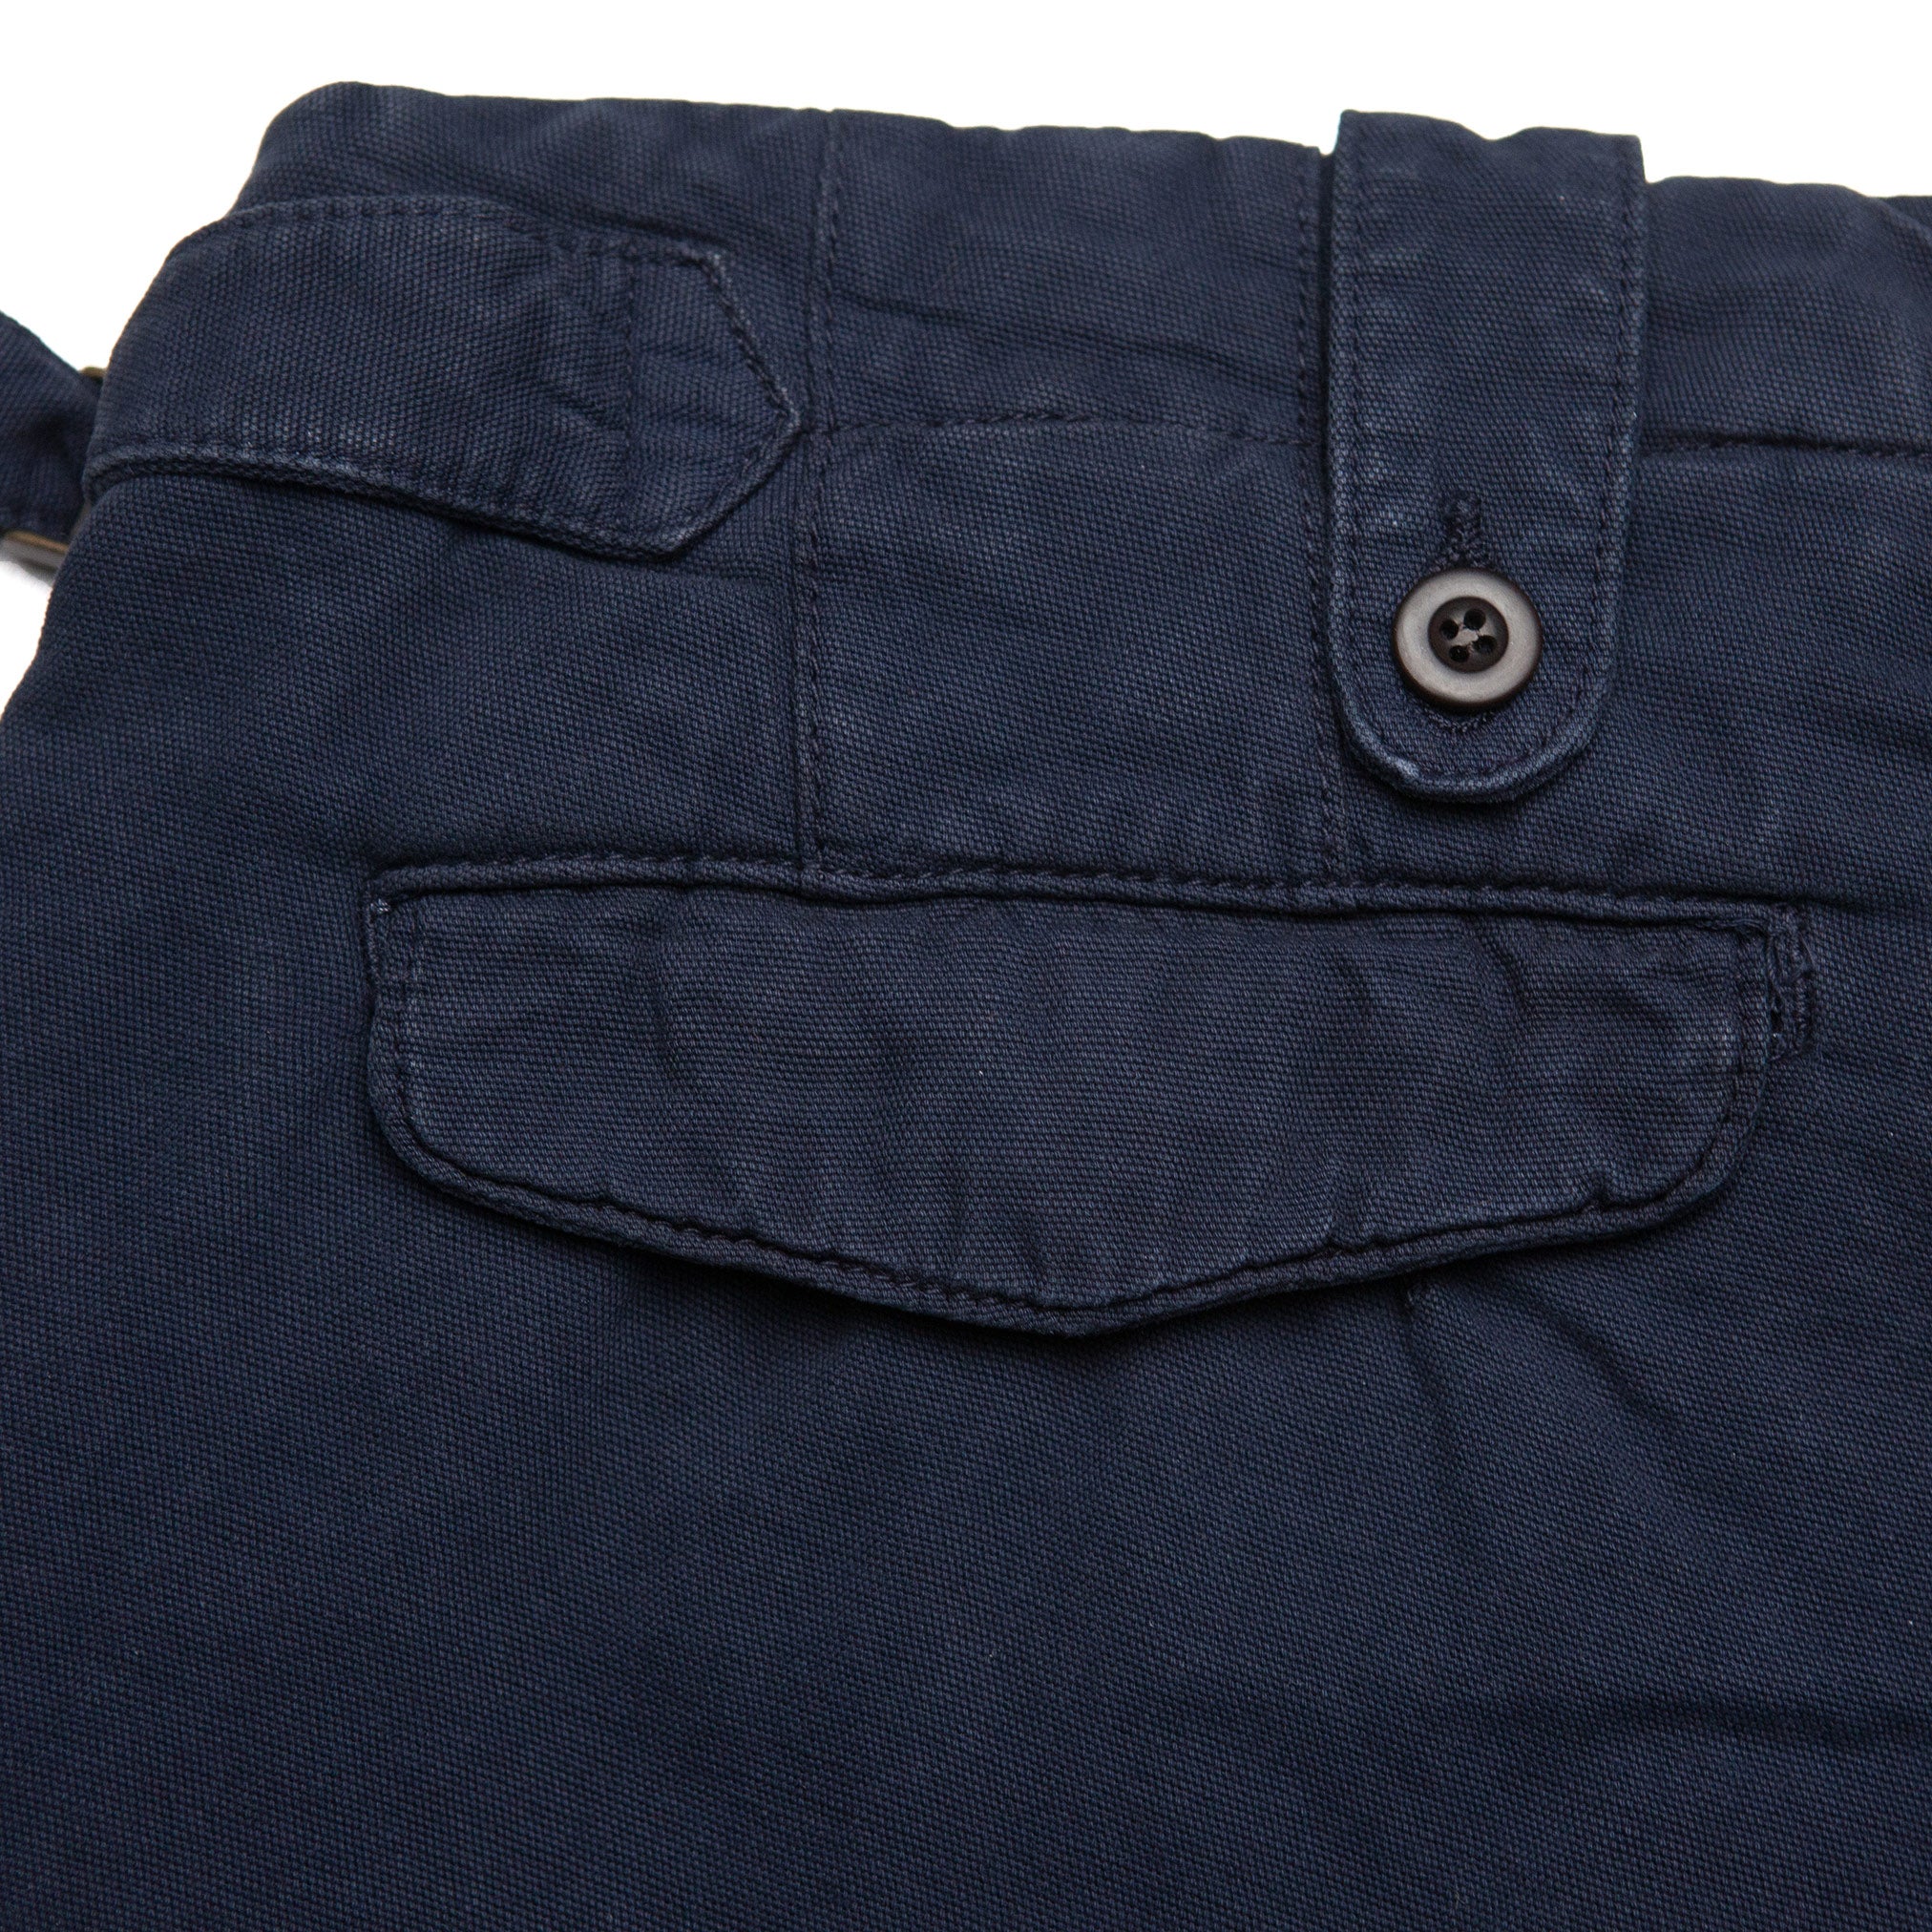 Navarre Cotton & Linen Shorts in Navy